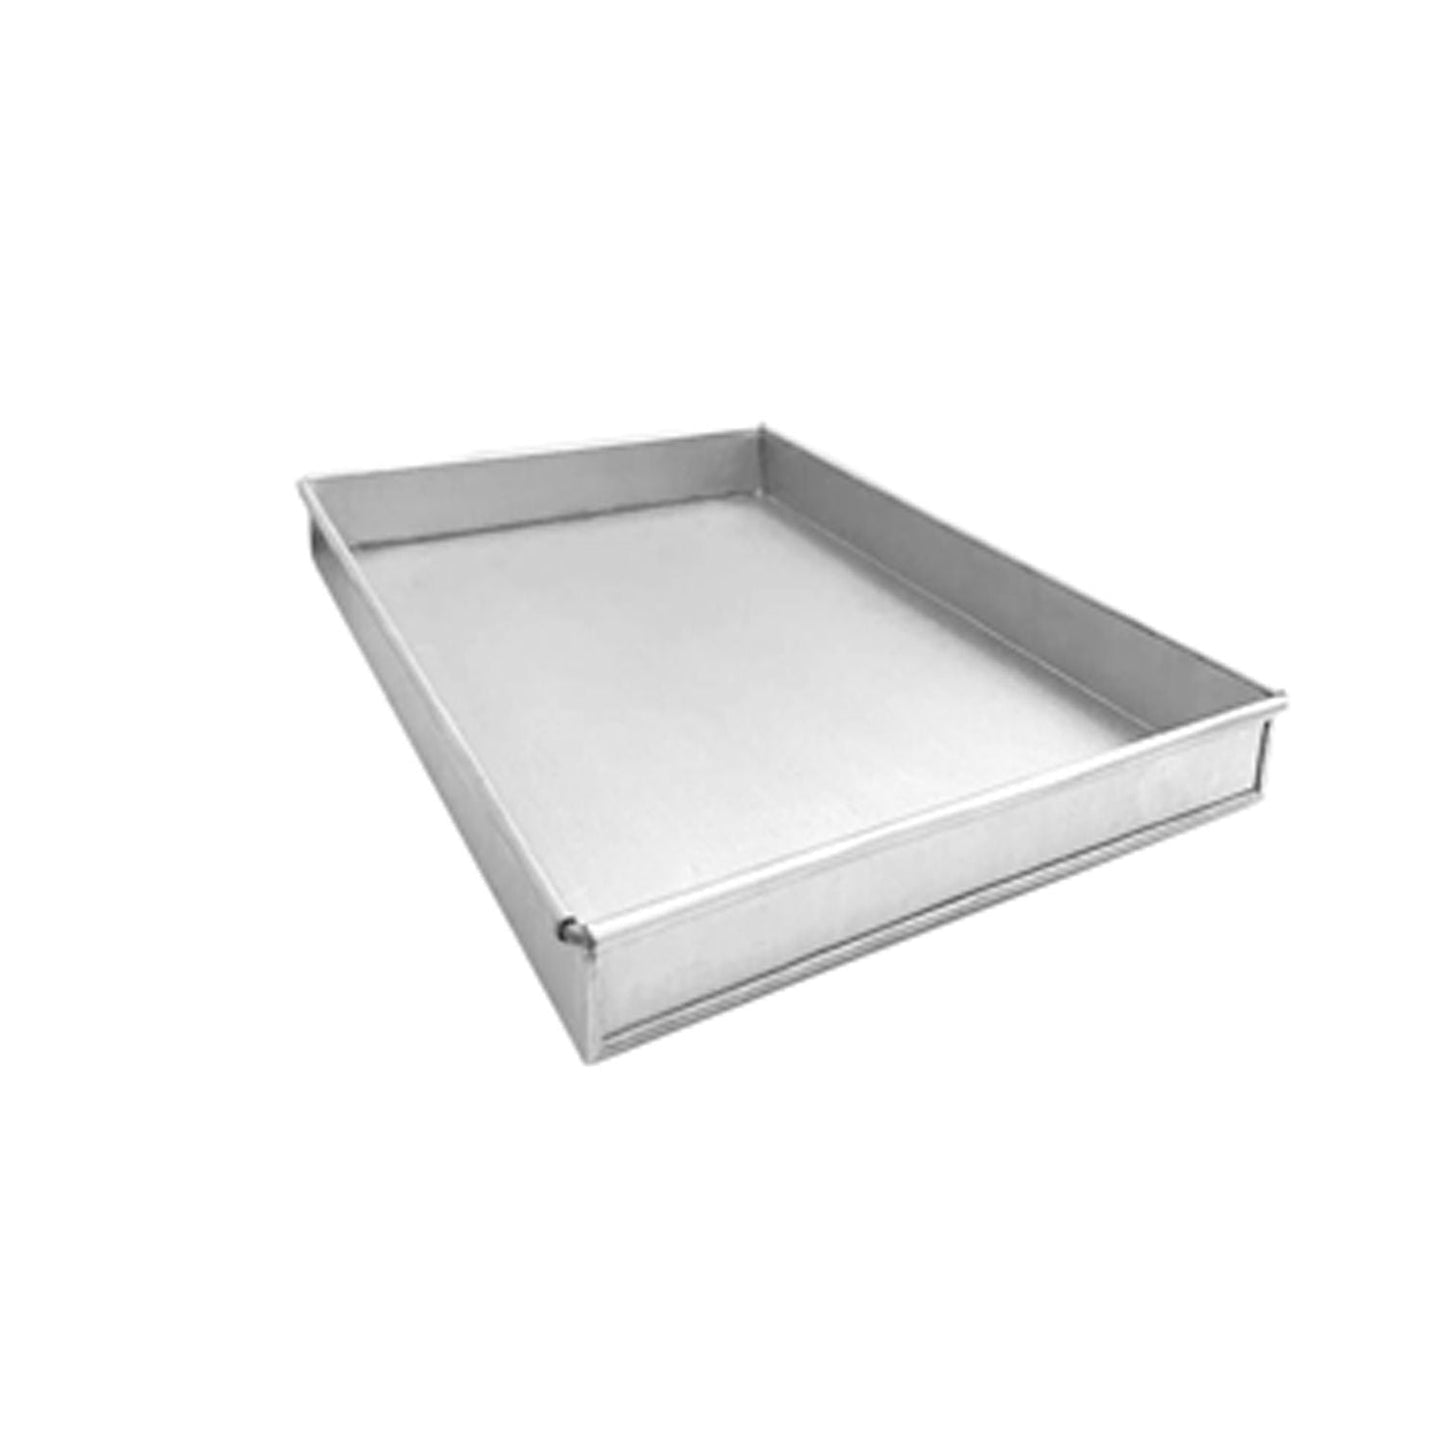 Aluminised Baking Tray - 600 x 400 x 25 mm - Medium